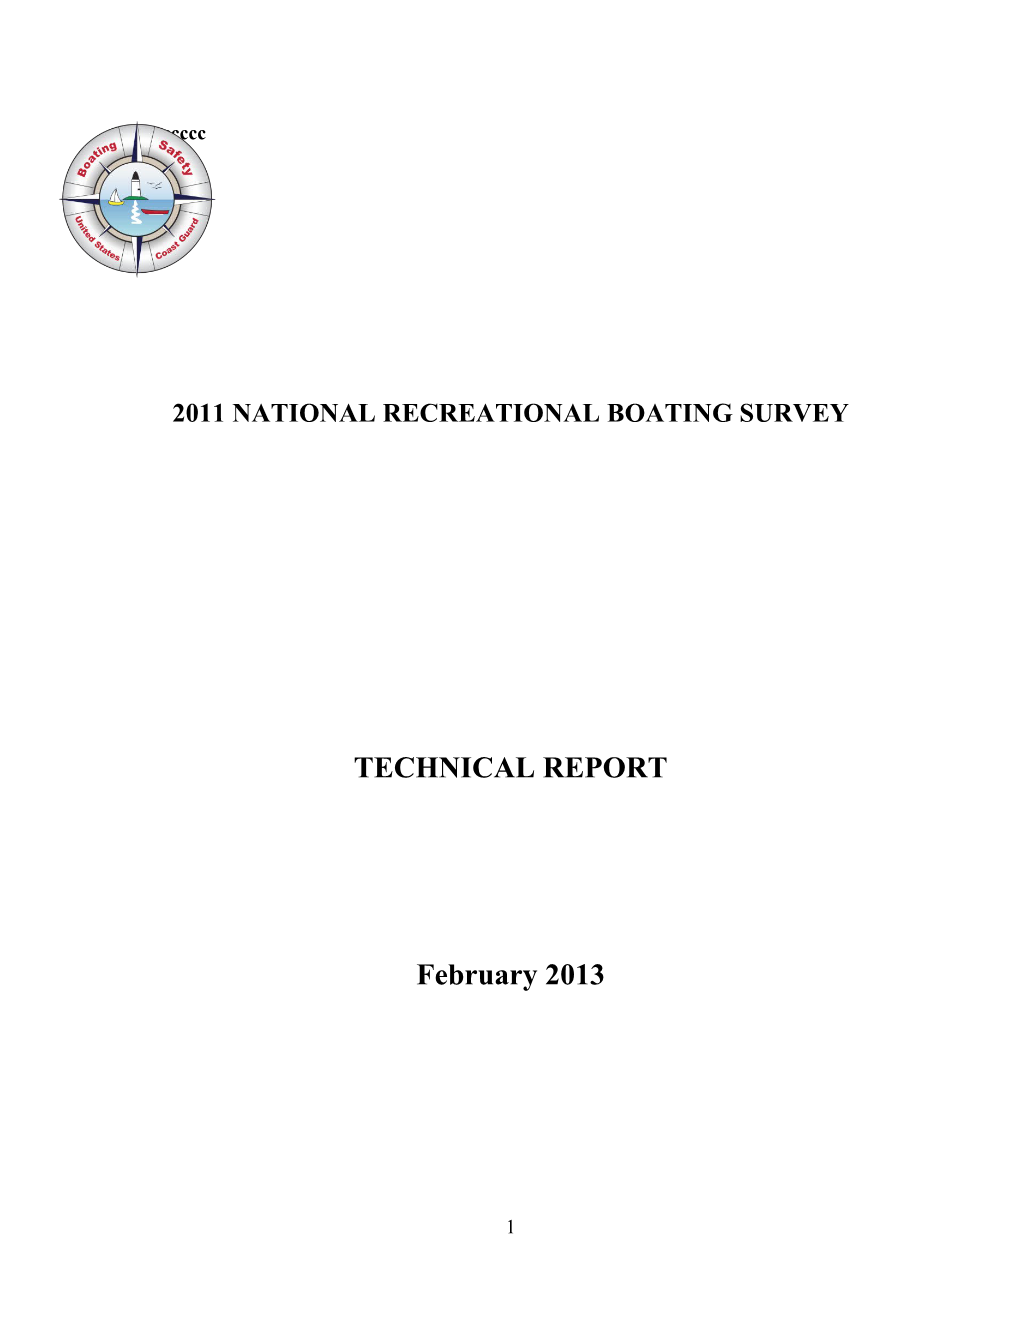 2011 National Recreational Boating Survey